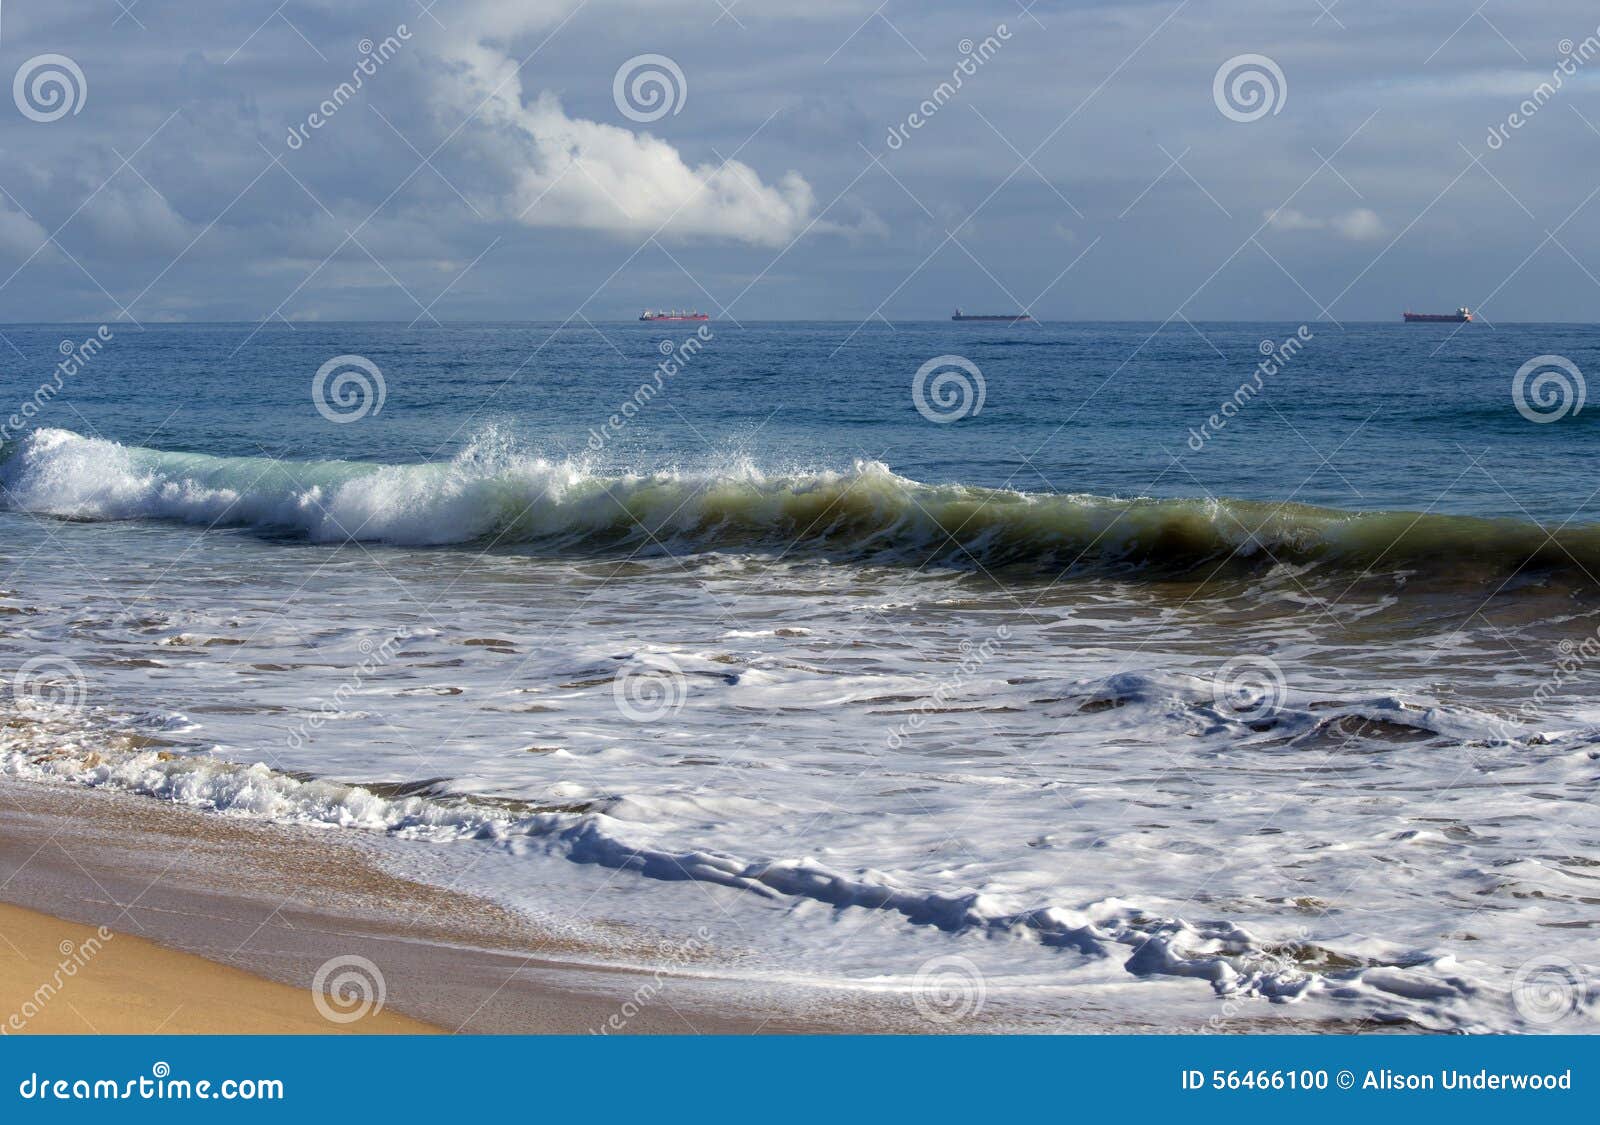 indian ocean waves on buffalo beach near bunbury western australia.